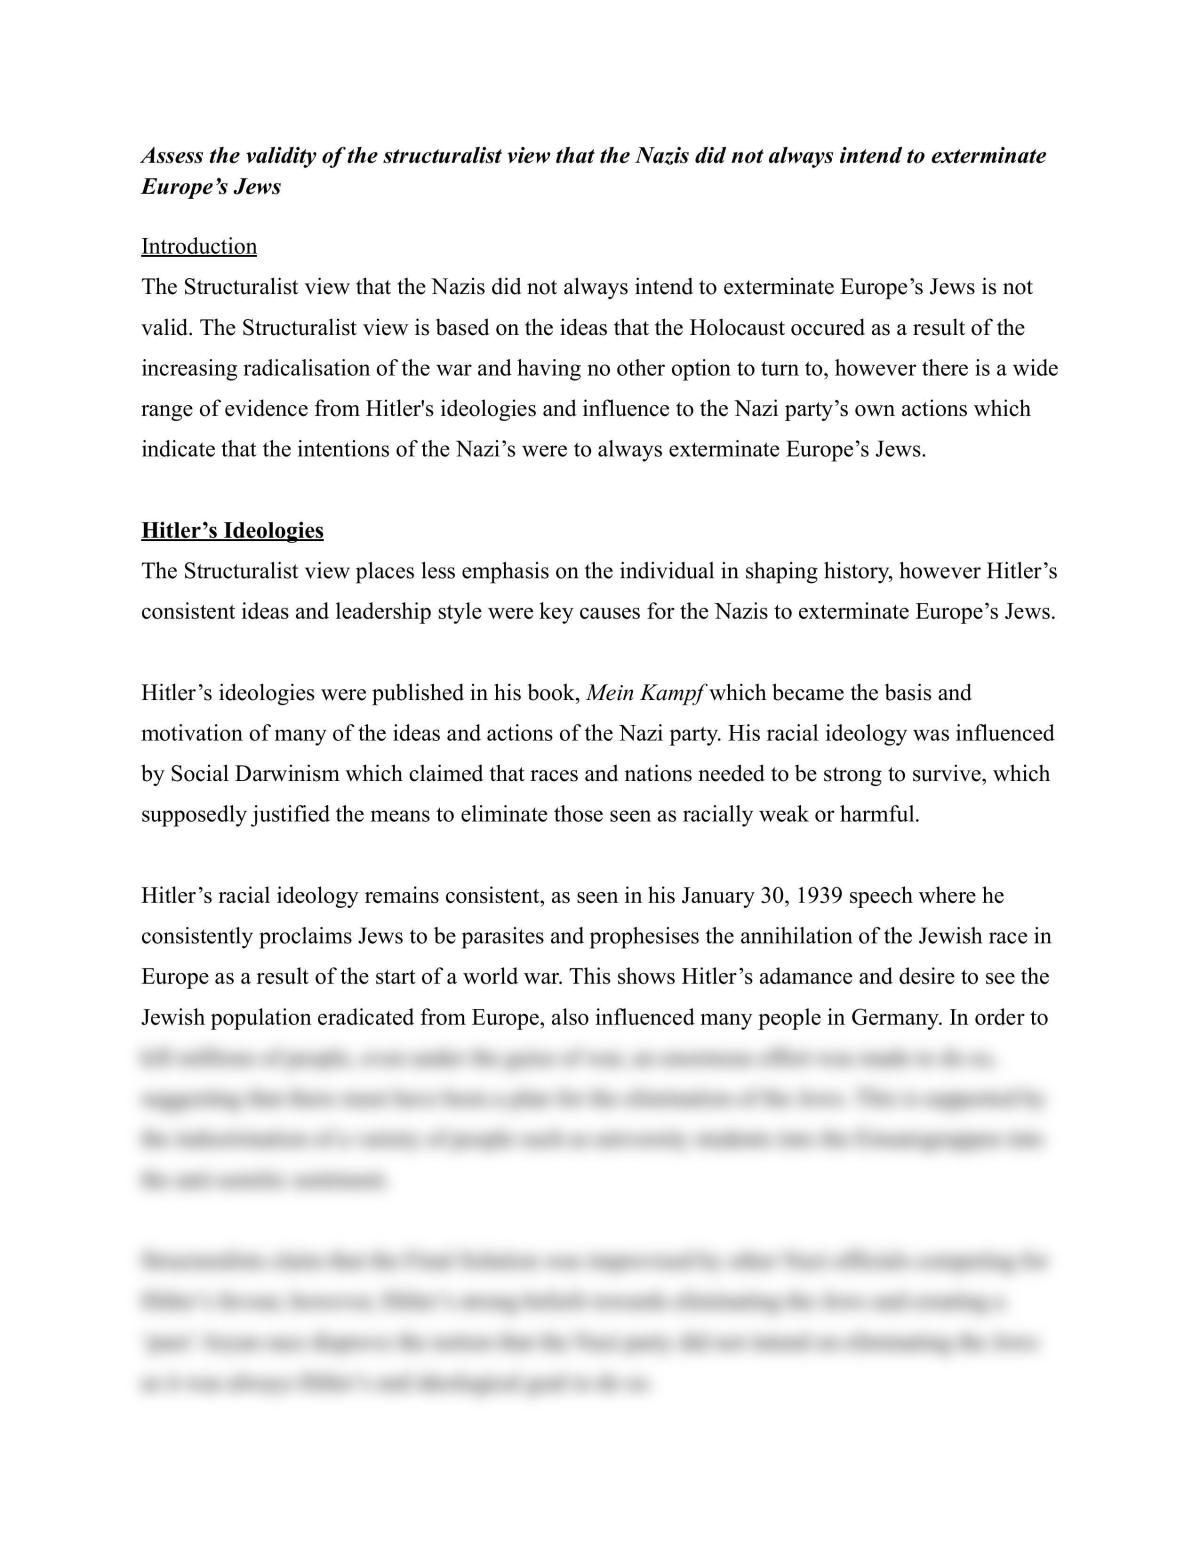 Modern History: Holocaust Essay  - Page 1